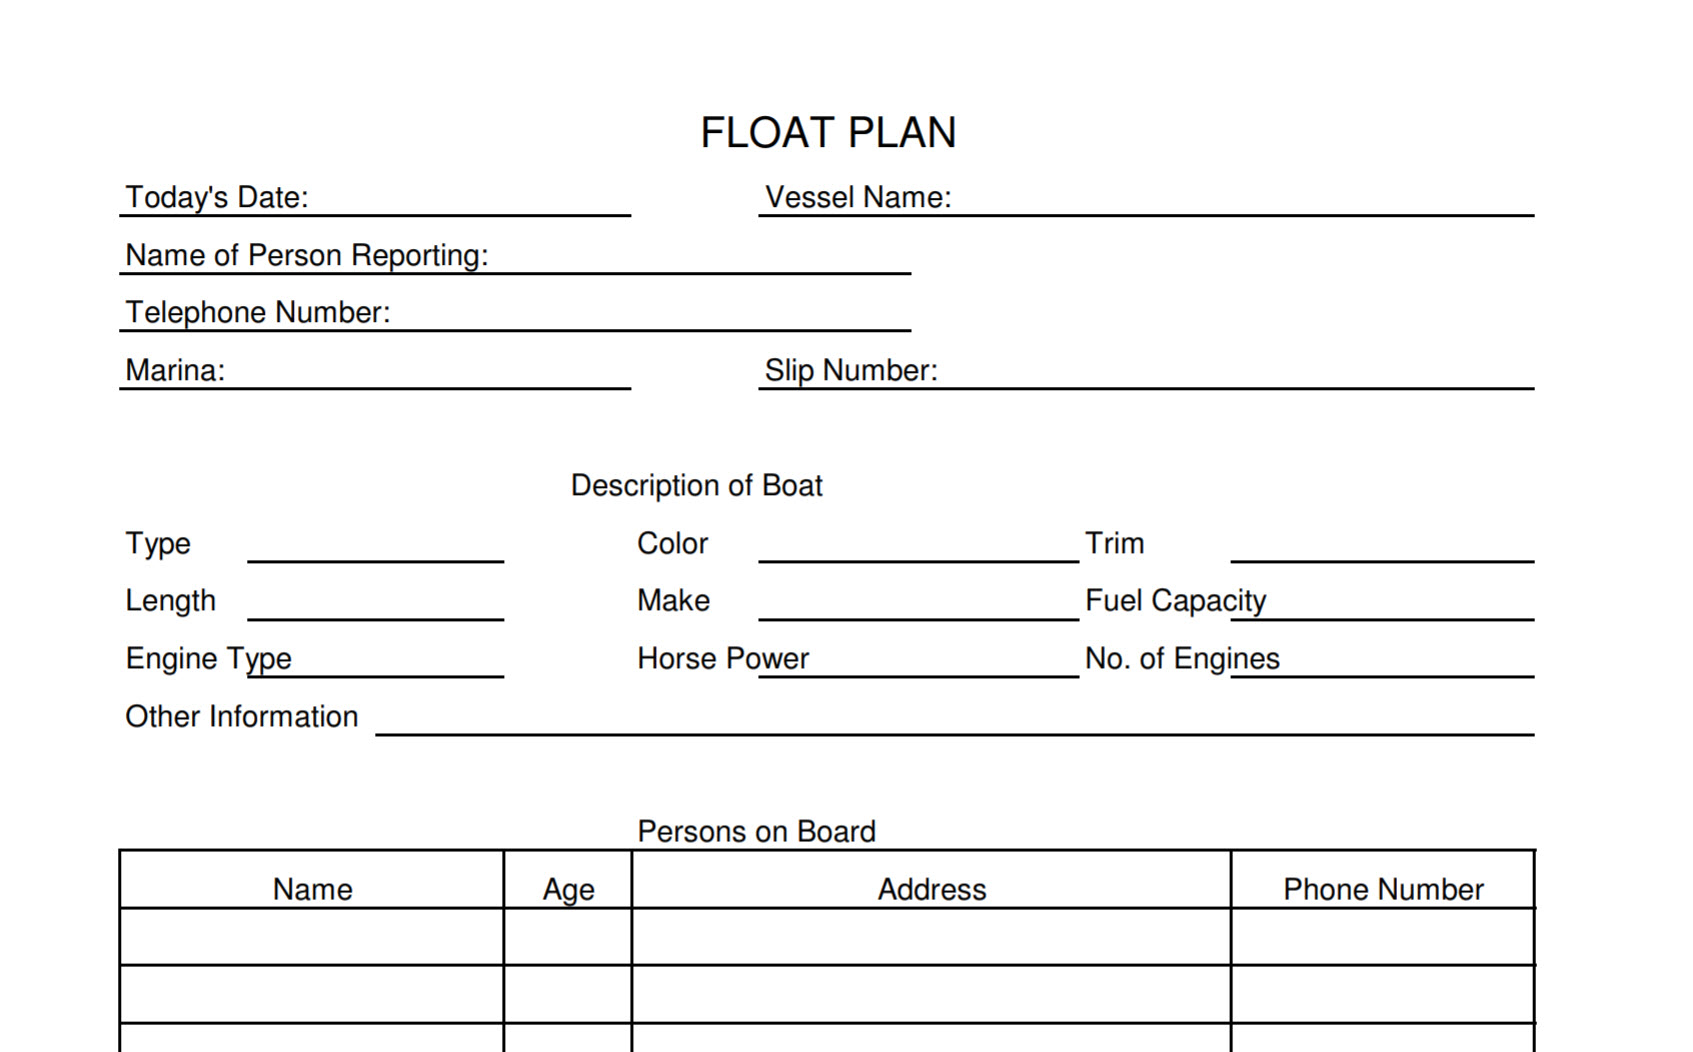 screenshot of blank float plan form